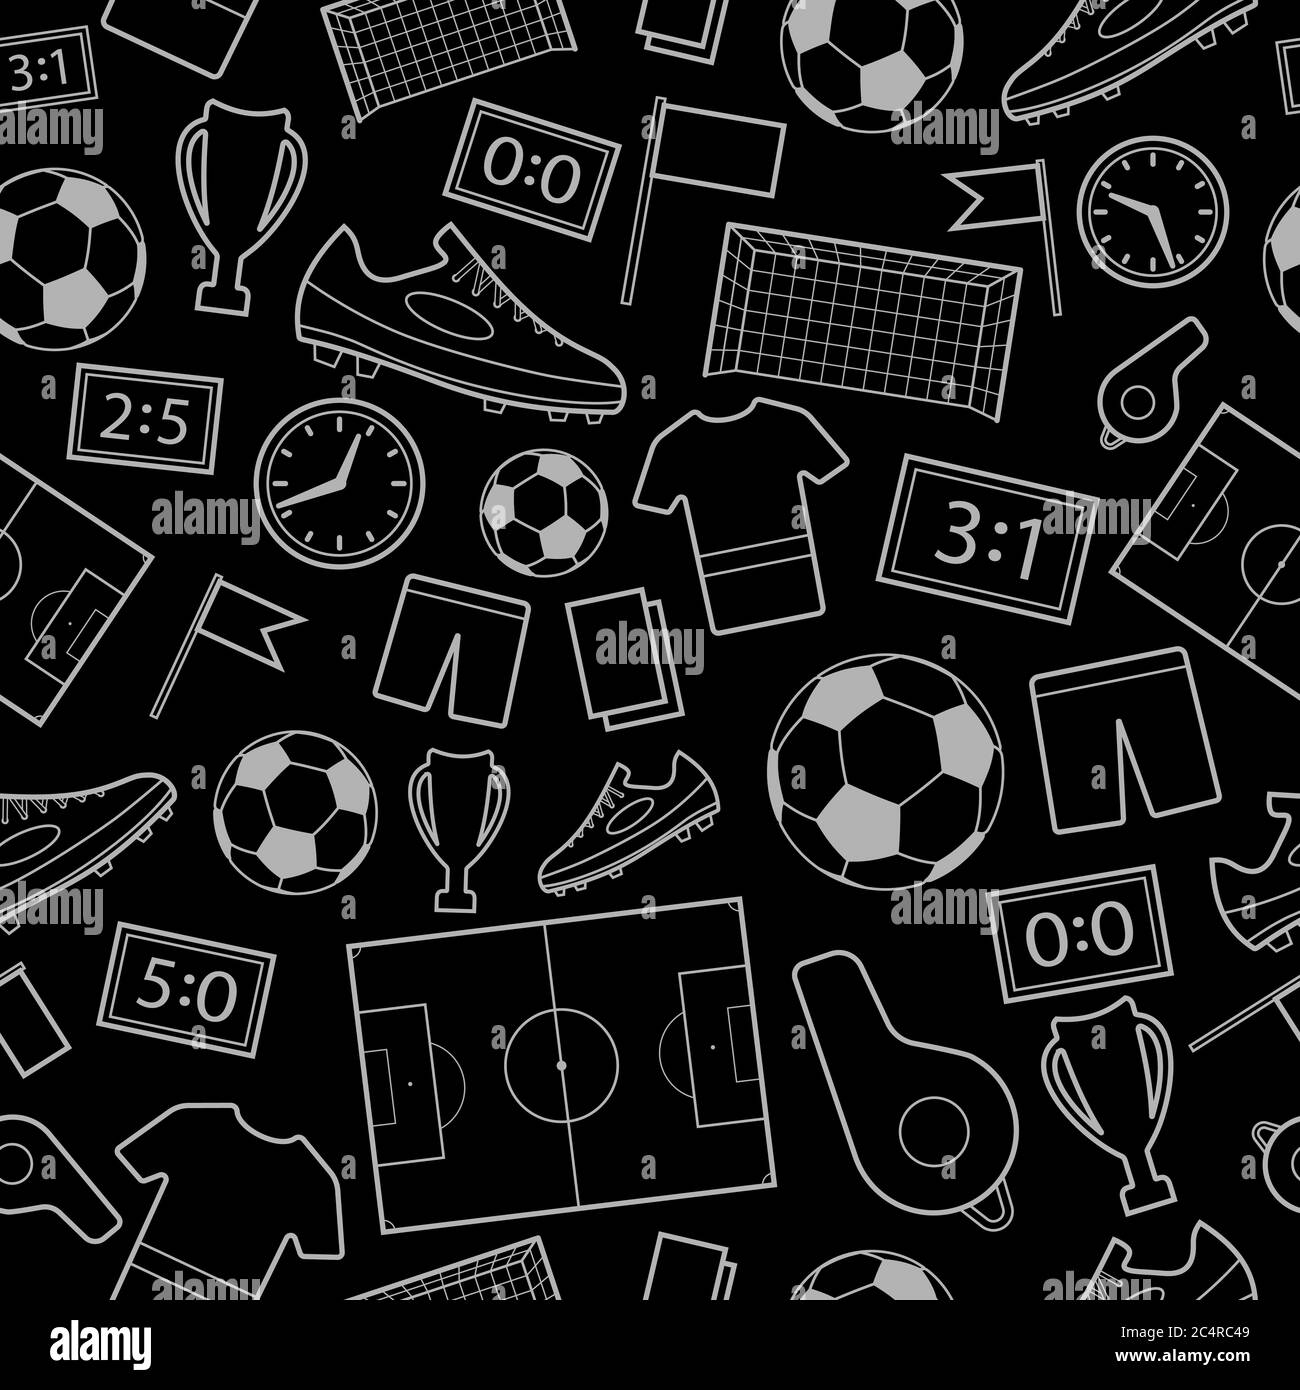 Seamless pattern of football symbols, white on black Stock Vector